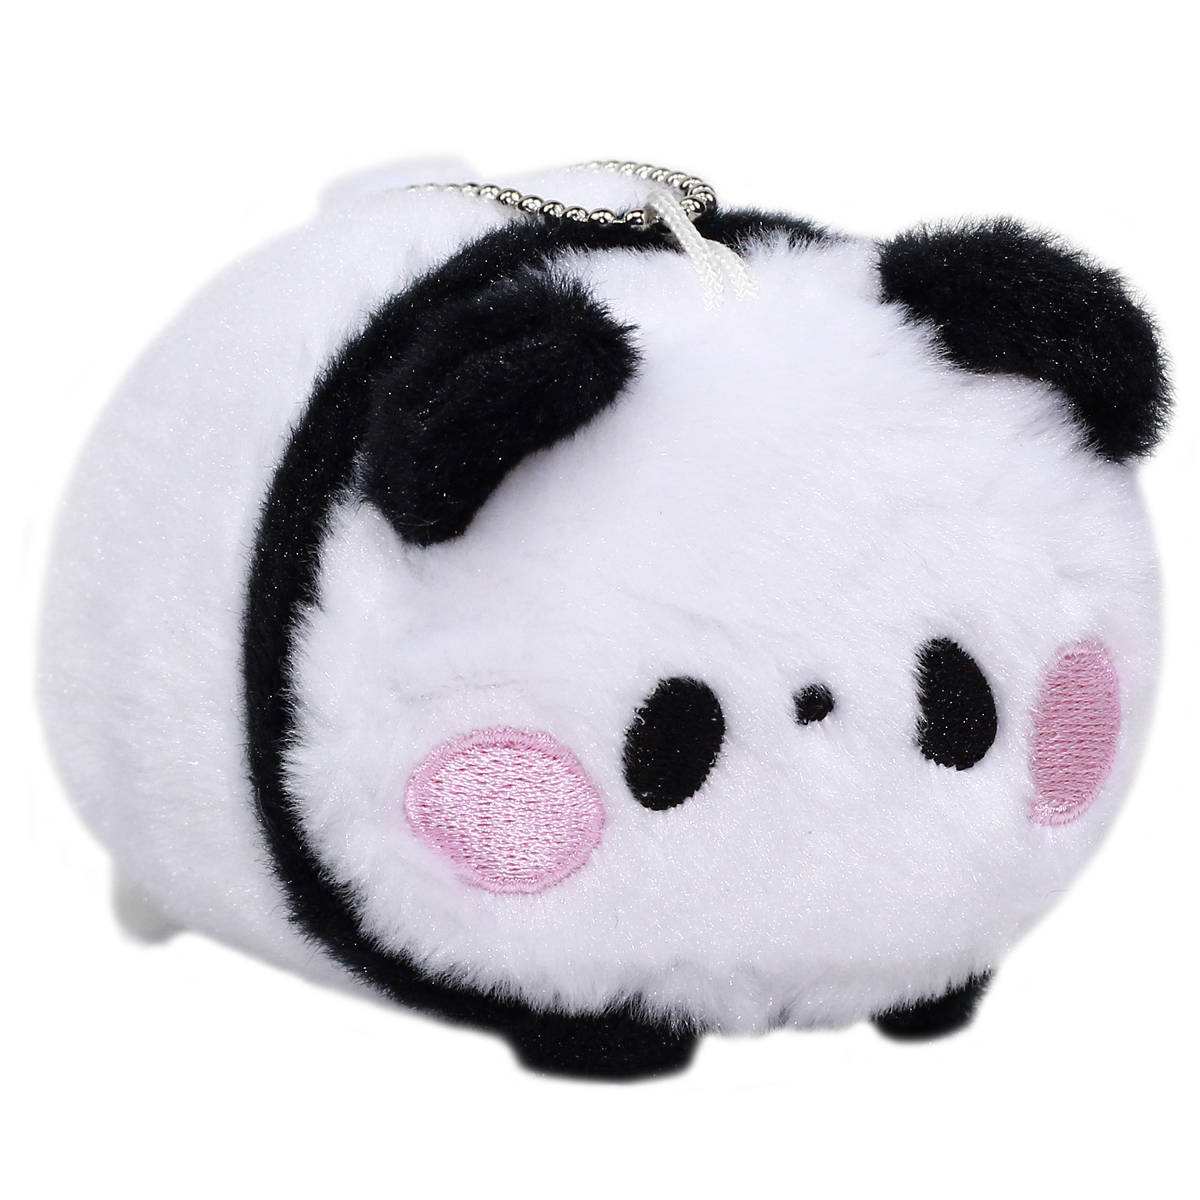 Super Soft Mochii Cute Panda Plush Japanese Squishy Plushie Toy Kawaii Bear Black White 3.5